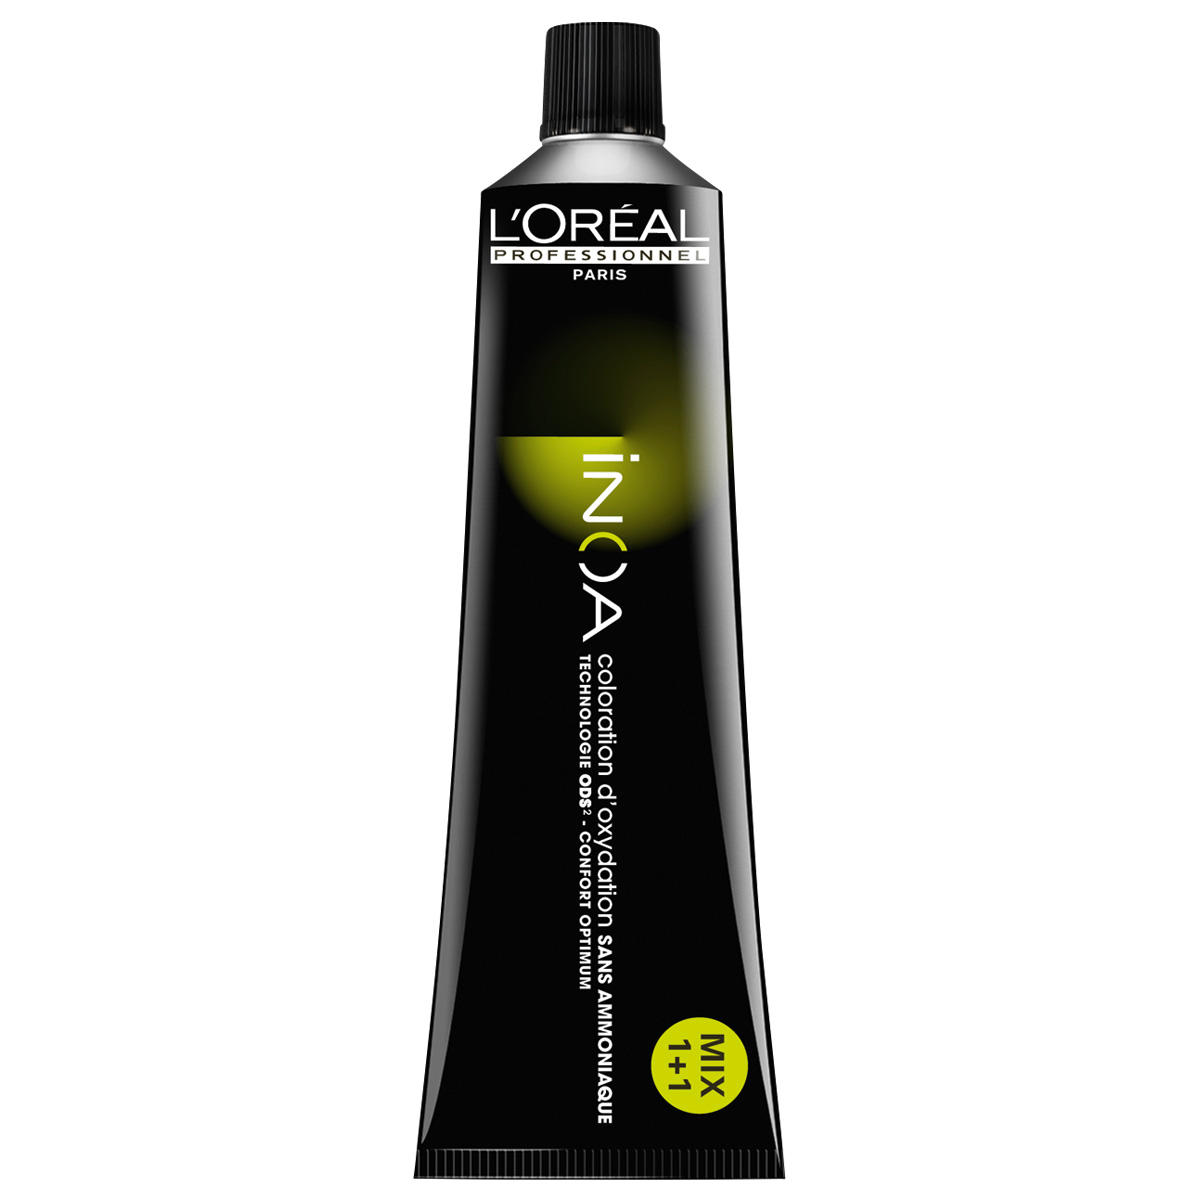 L'Oréal Professionnel Paris Coloration 9.2 Rubio muy claro Irisé, tubo 60 ml